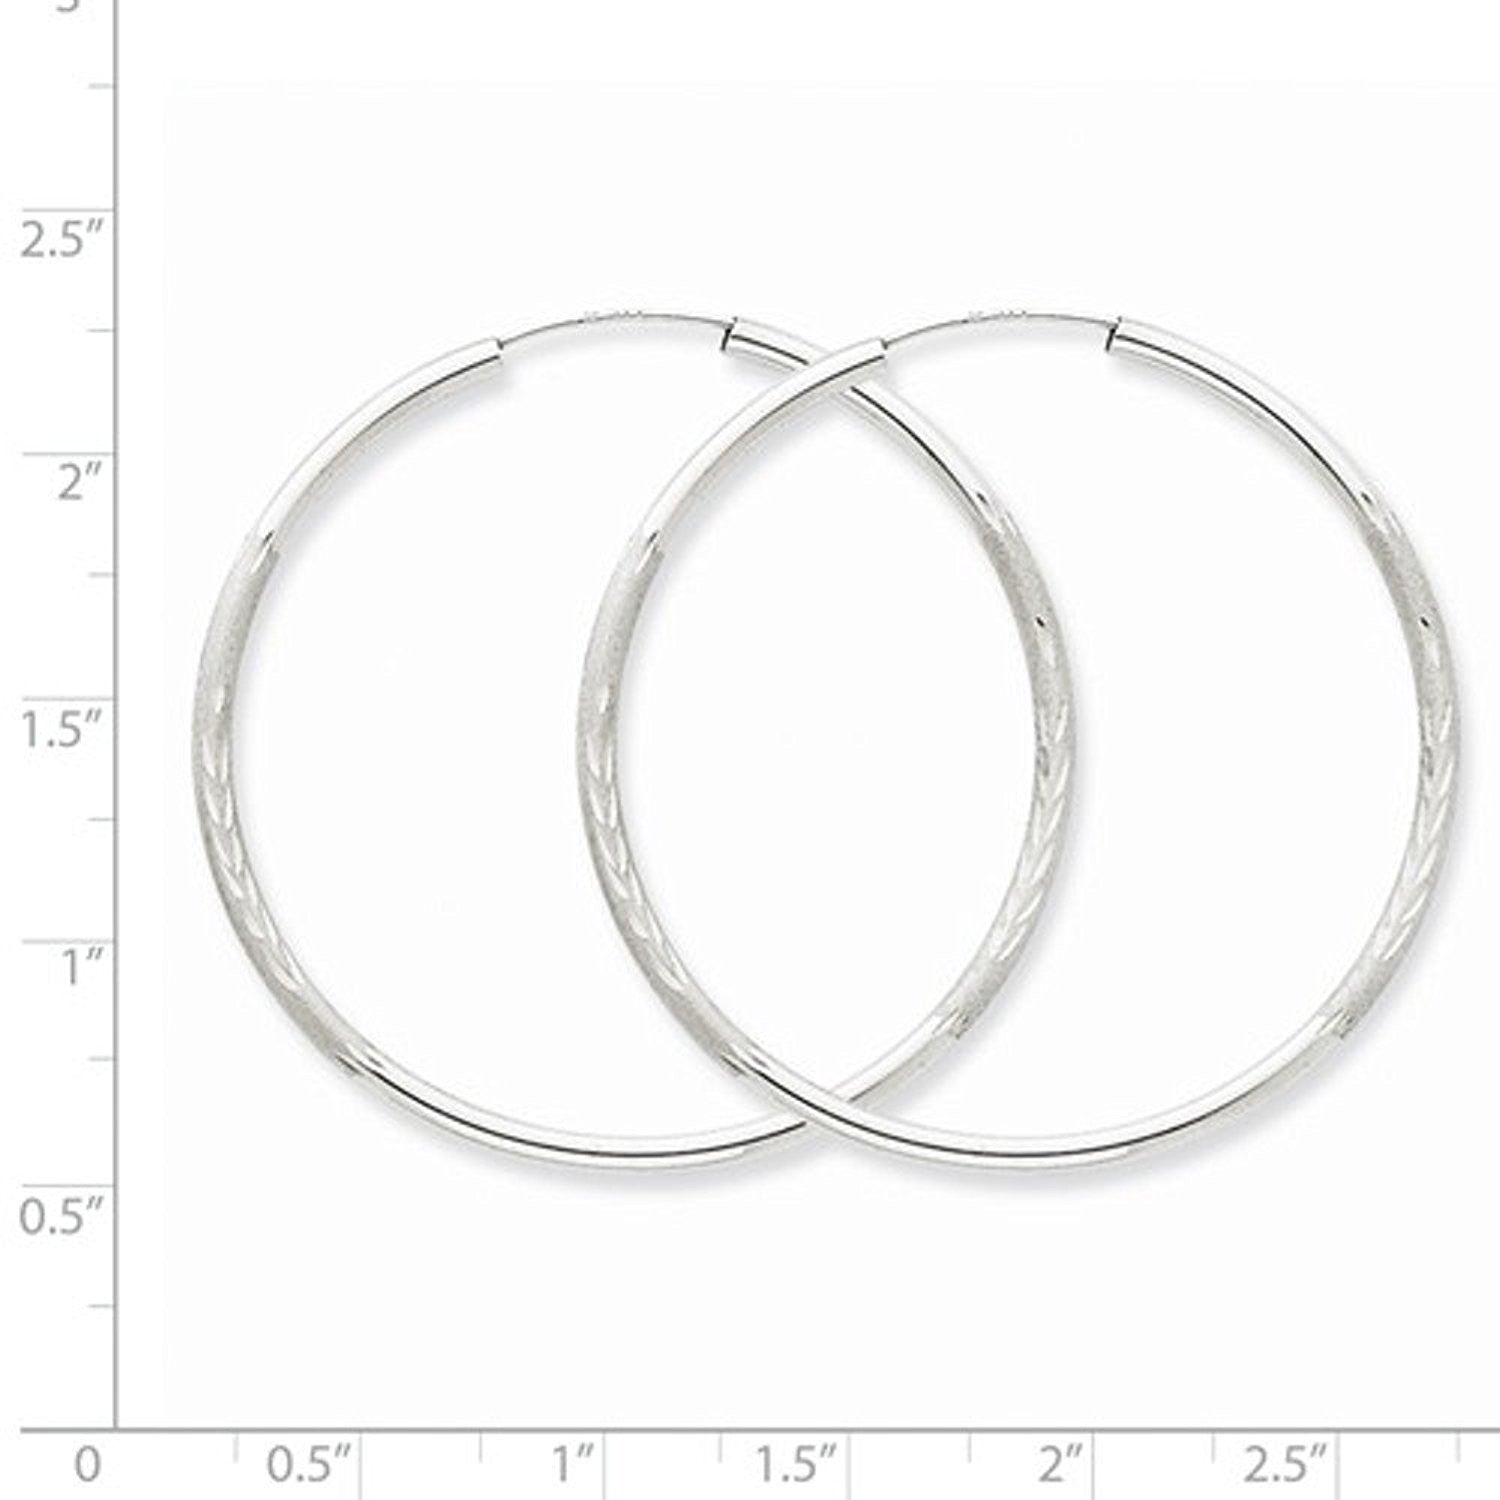 14K White Gold 42mm Satin Textured Round Endless Hoop Earrings